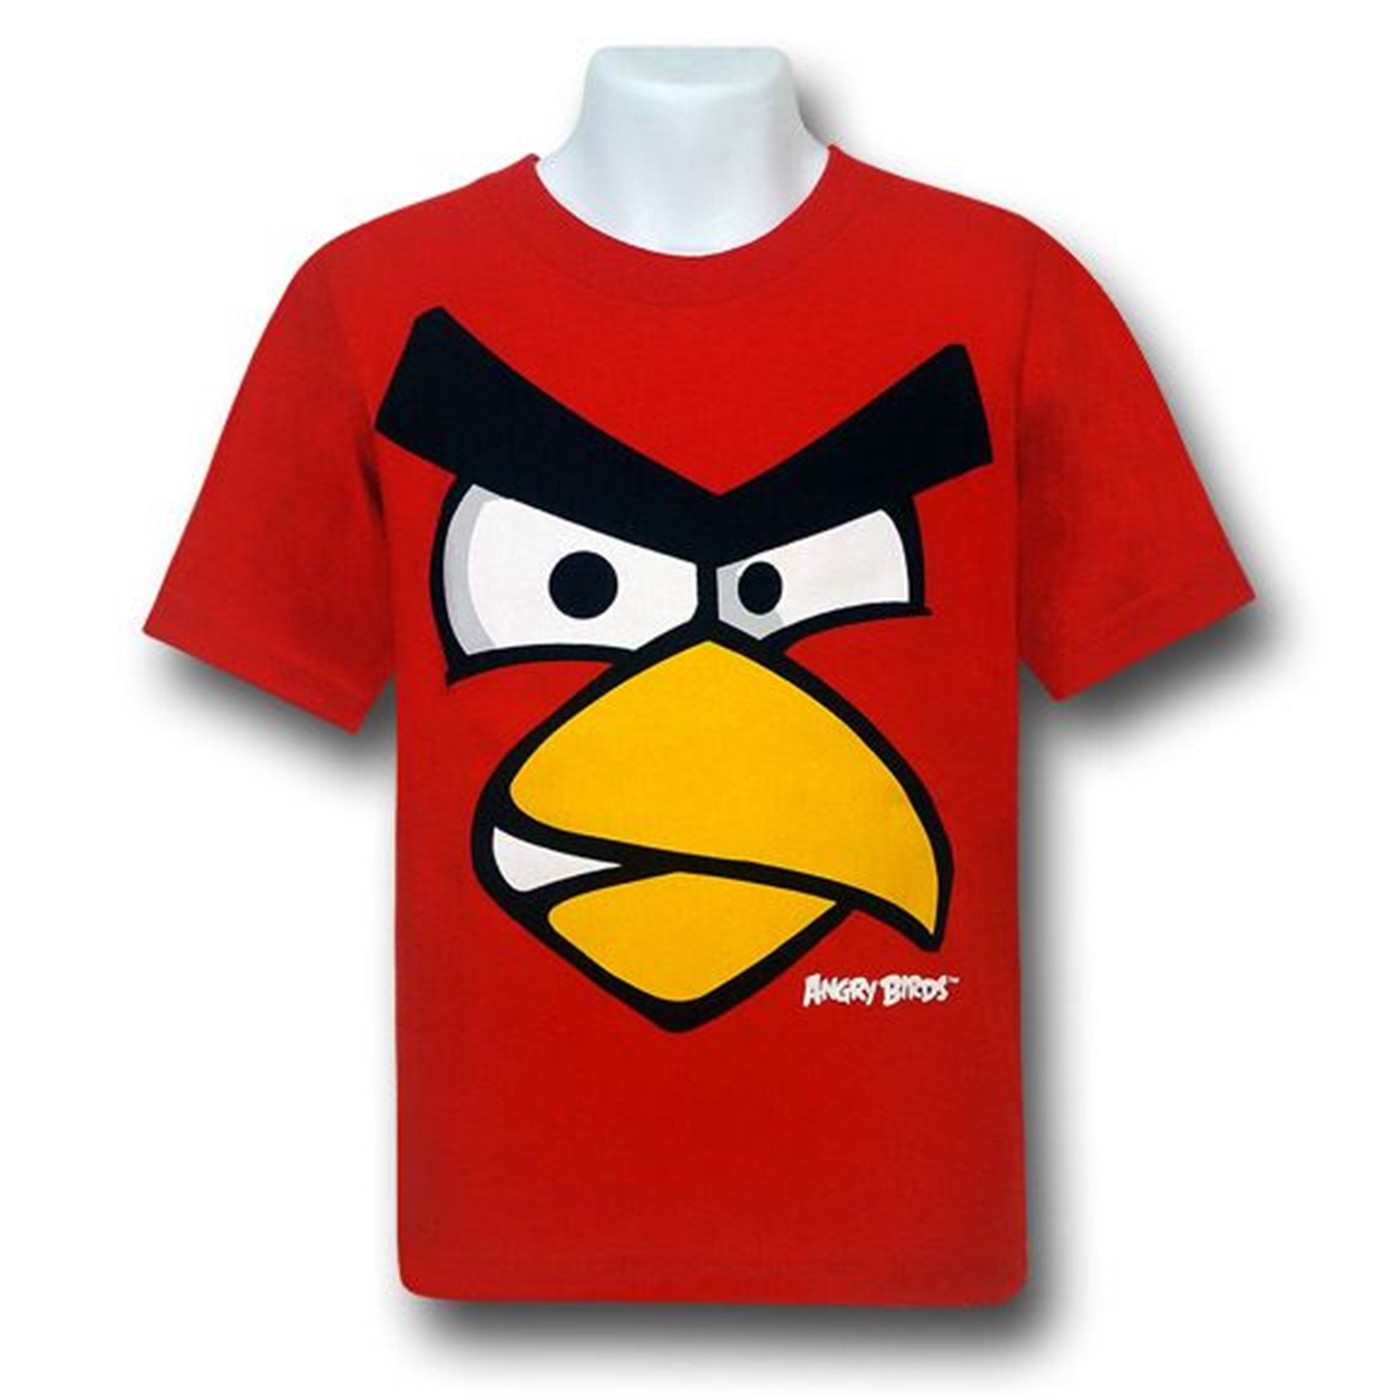 Angry Birds Big Red Juvenile T-Shirt